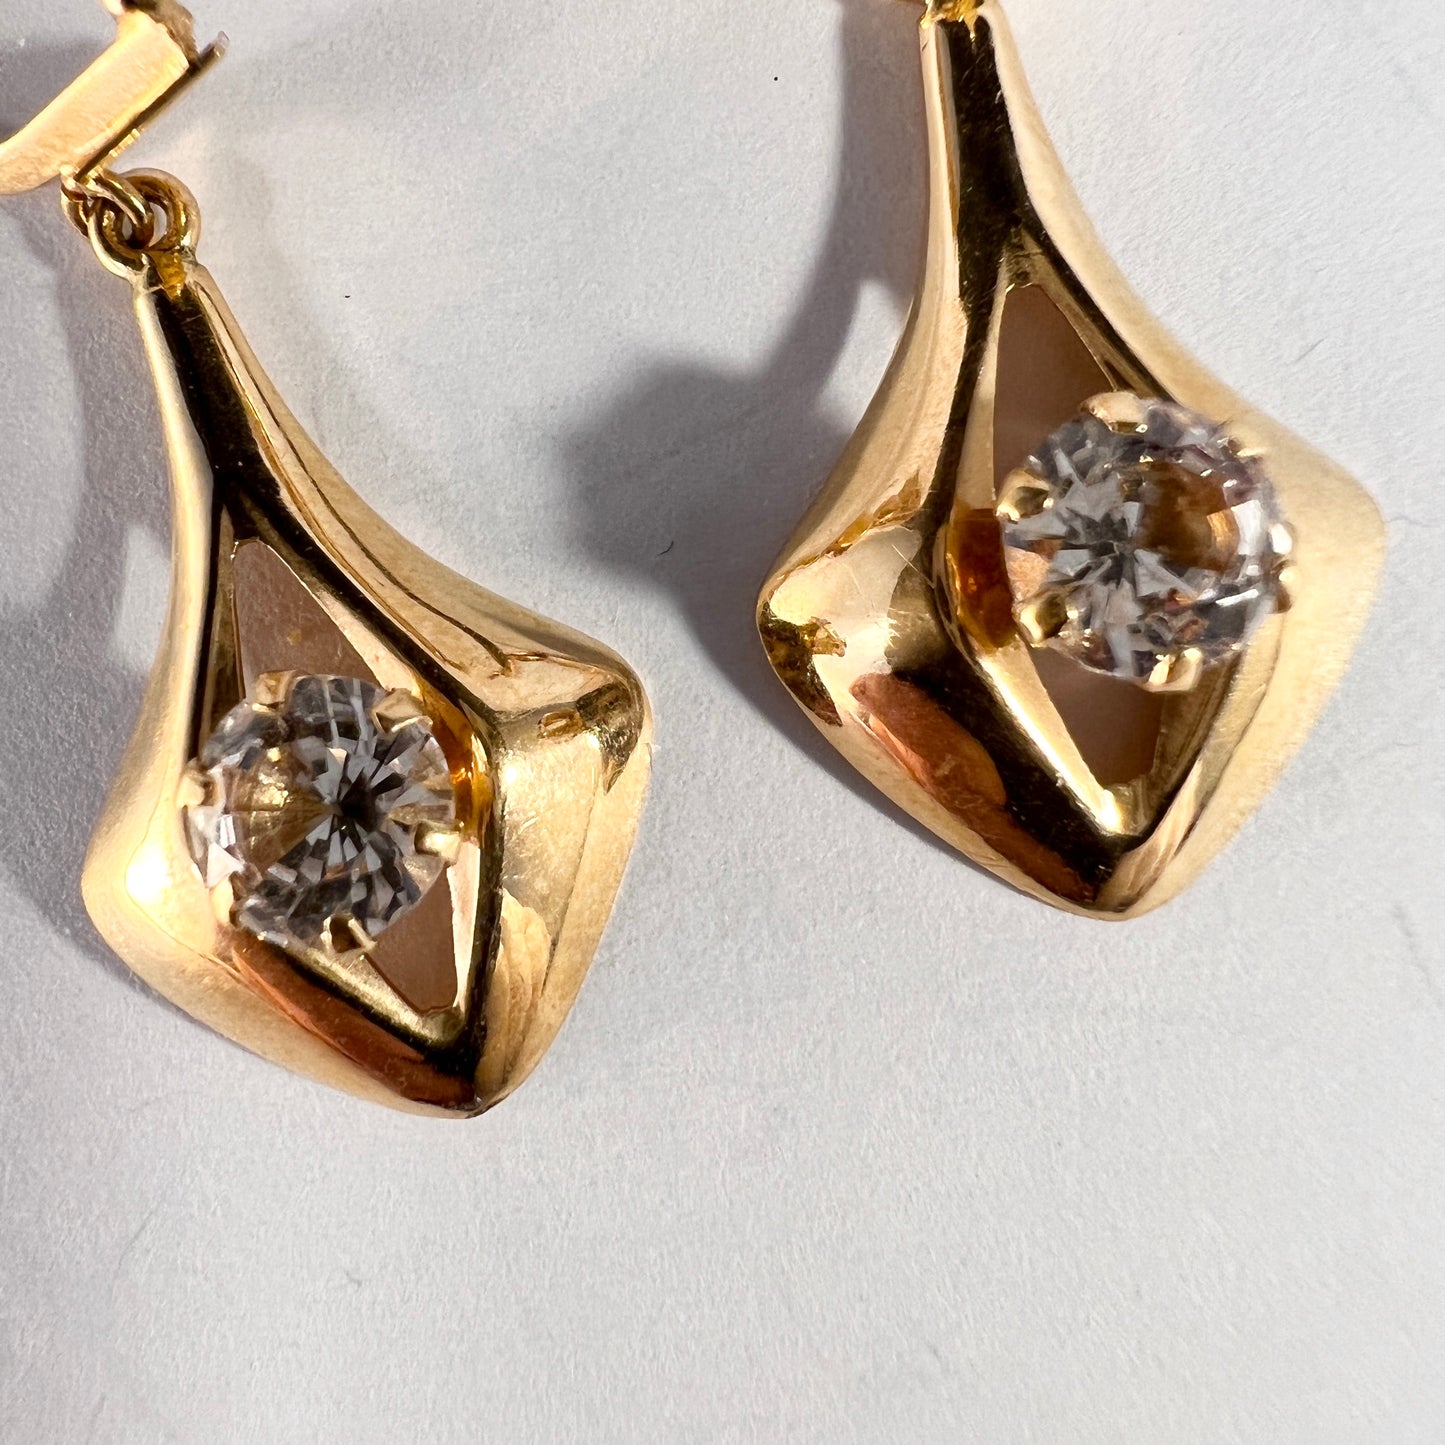 Alton, Sweden 1968. Vintage 18k Gold Rock Crystal Earrings.